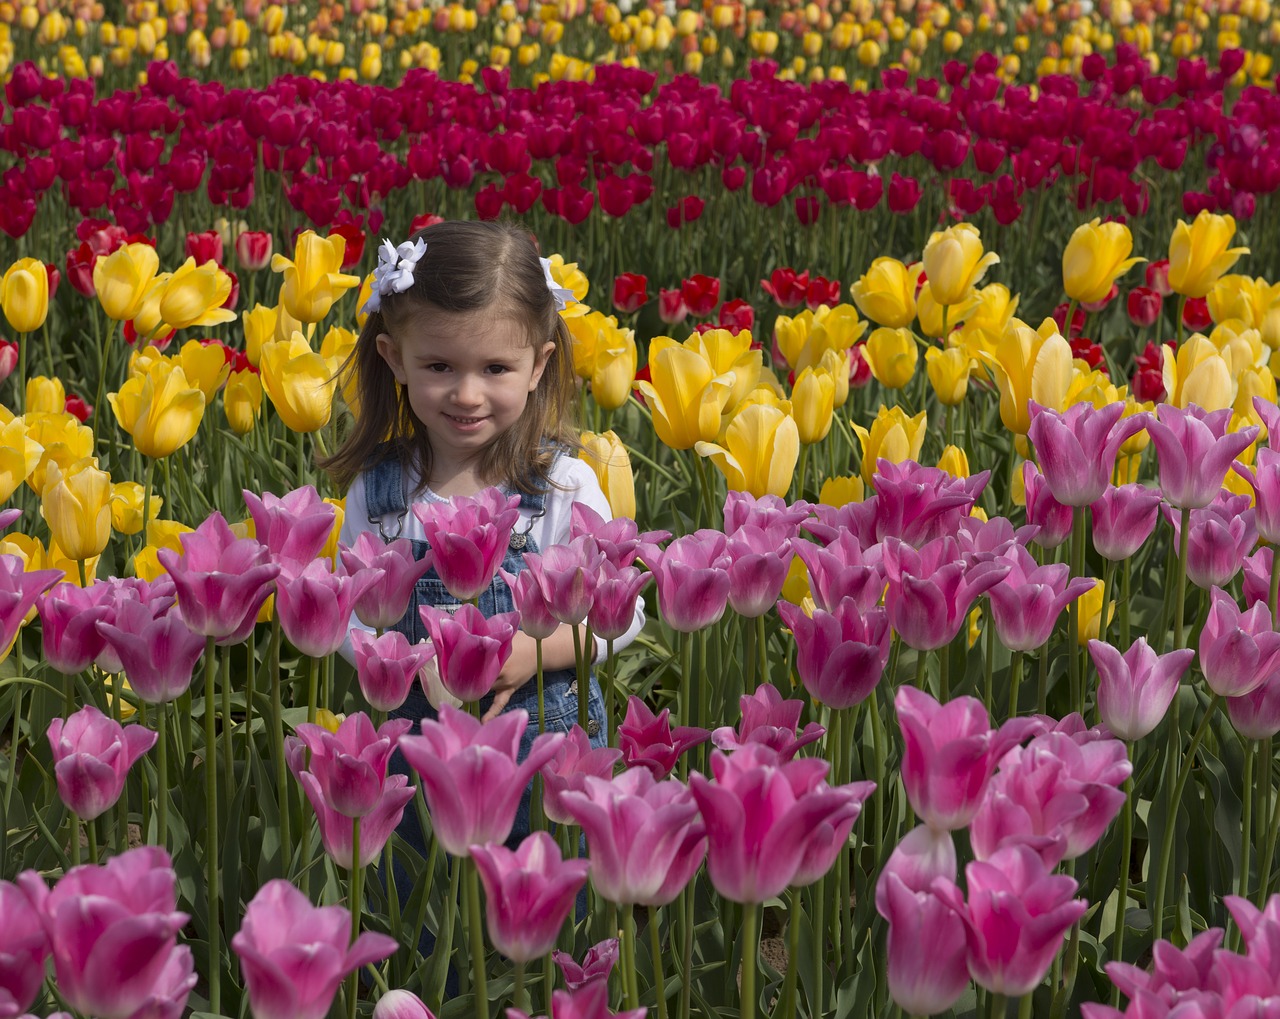 Image - girl flowers tulips tulip field